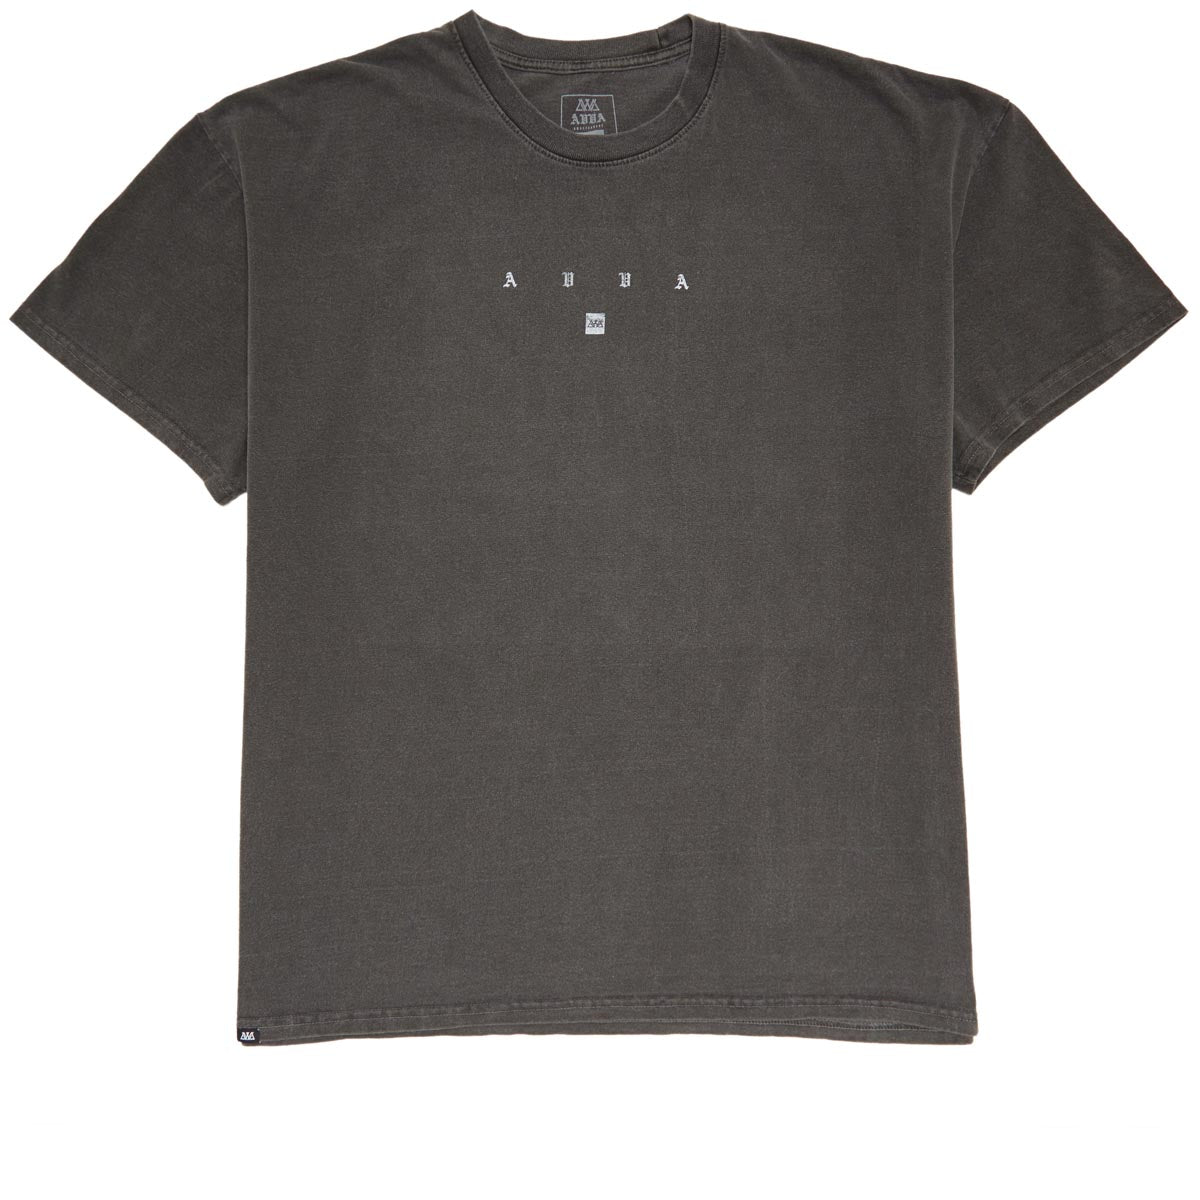 AVVA Reef Rider T-Shirt - Charcoal Grey image 1